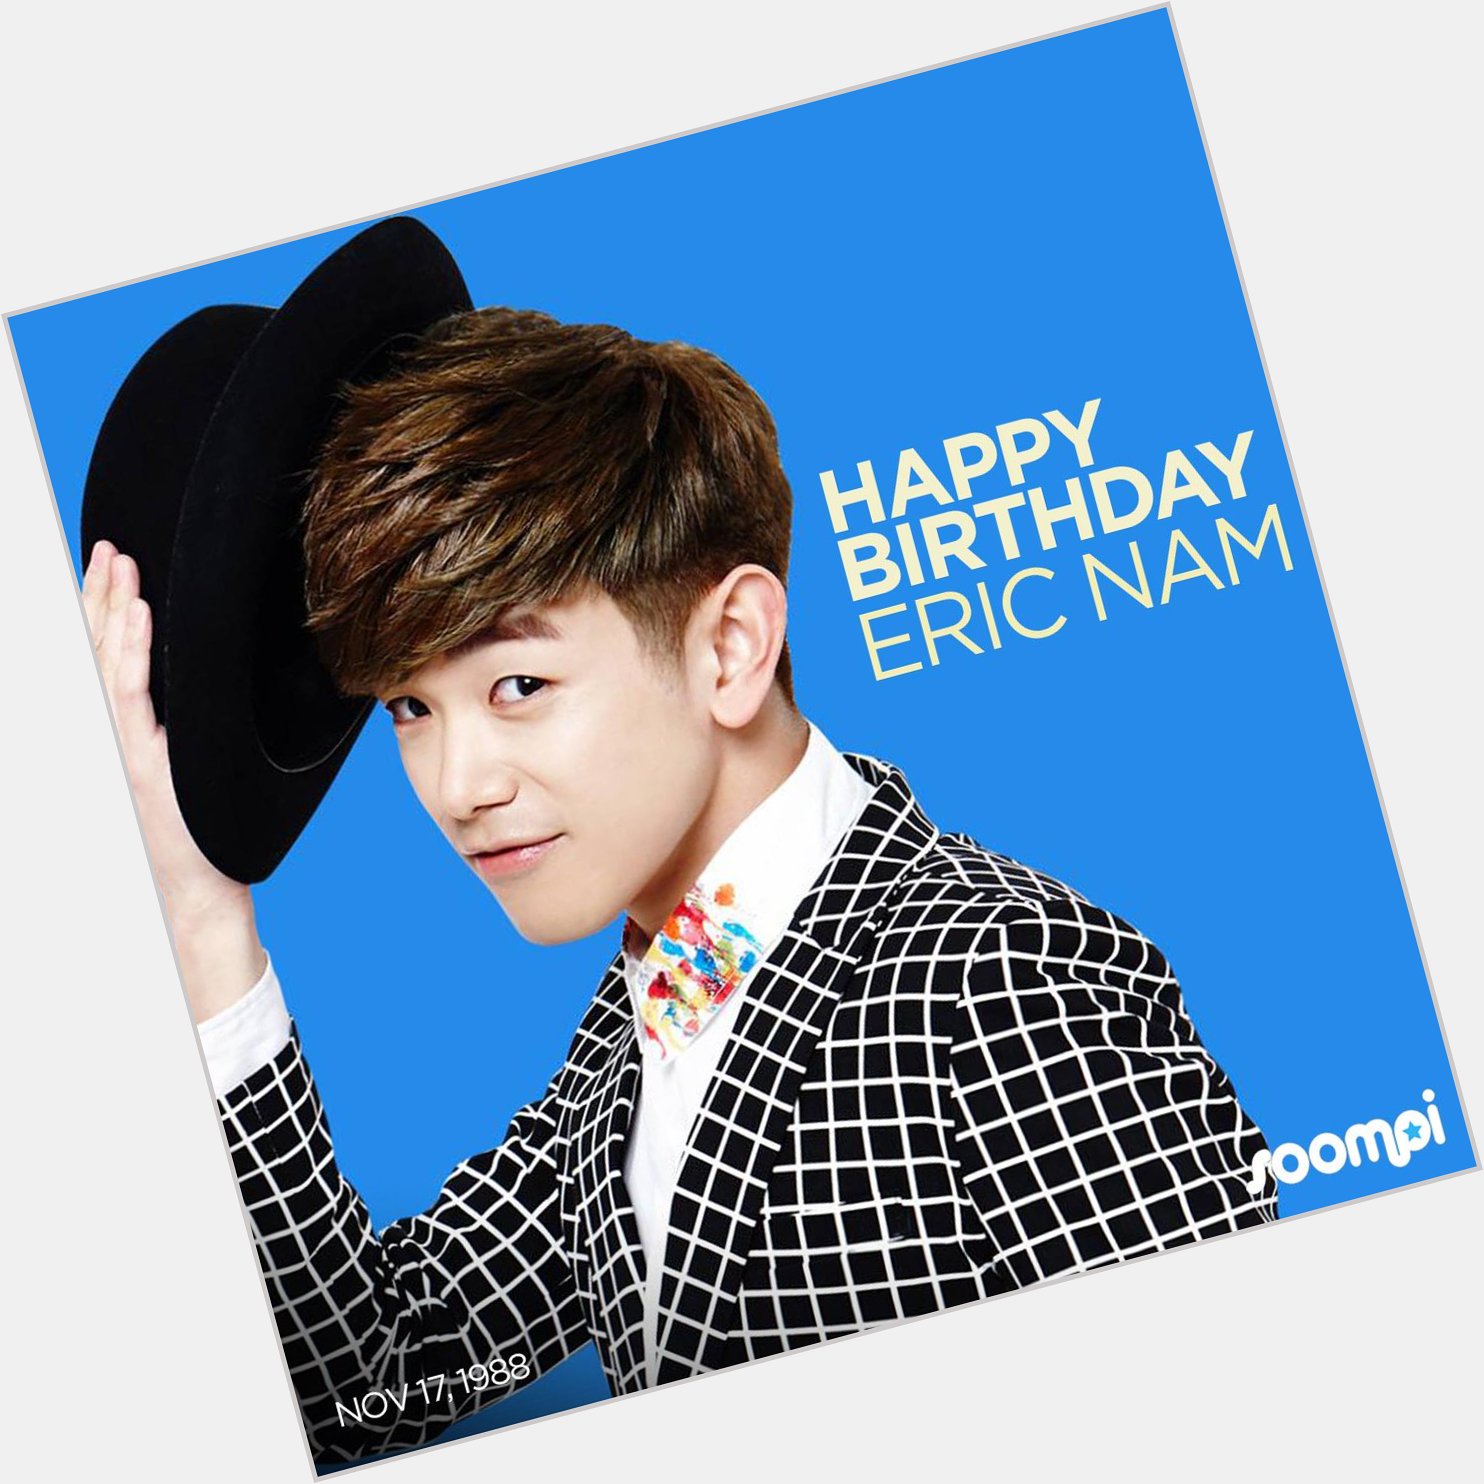 Happy Birthday Eric Nam sunbaenim! 